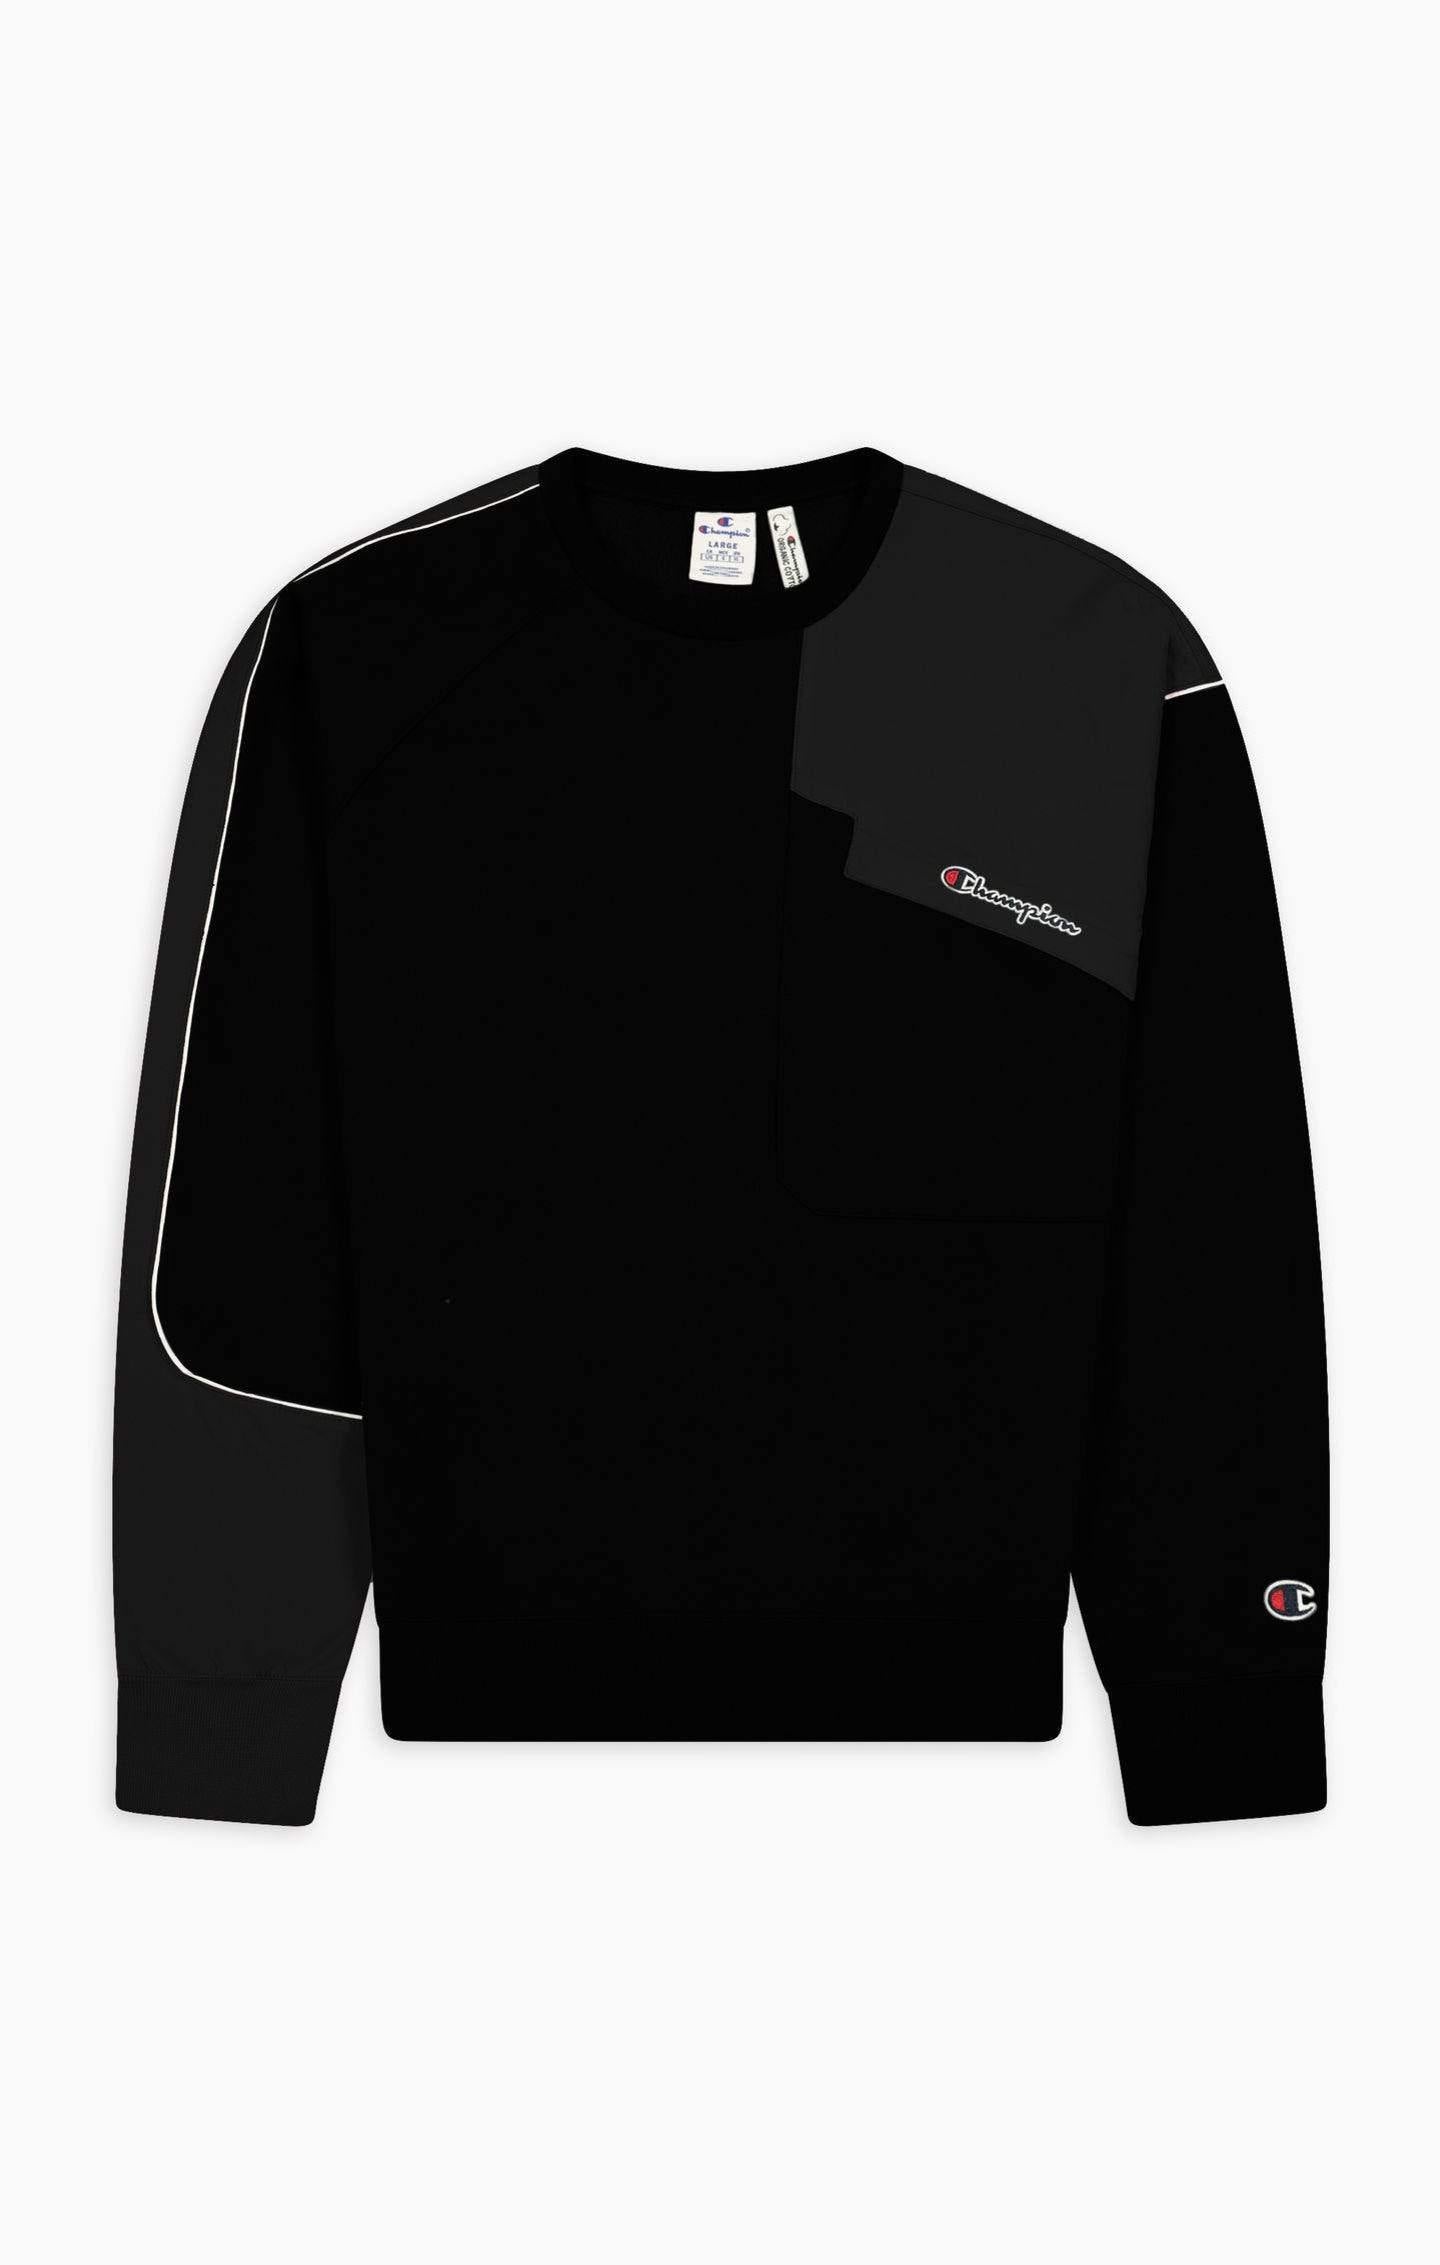 Patchwork Reverse Weave Organic Cotton Blend Sweatshirt - Preta - BlackBeard Fashion Lounge - 